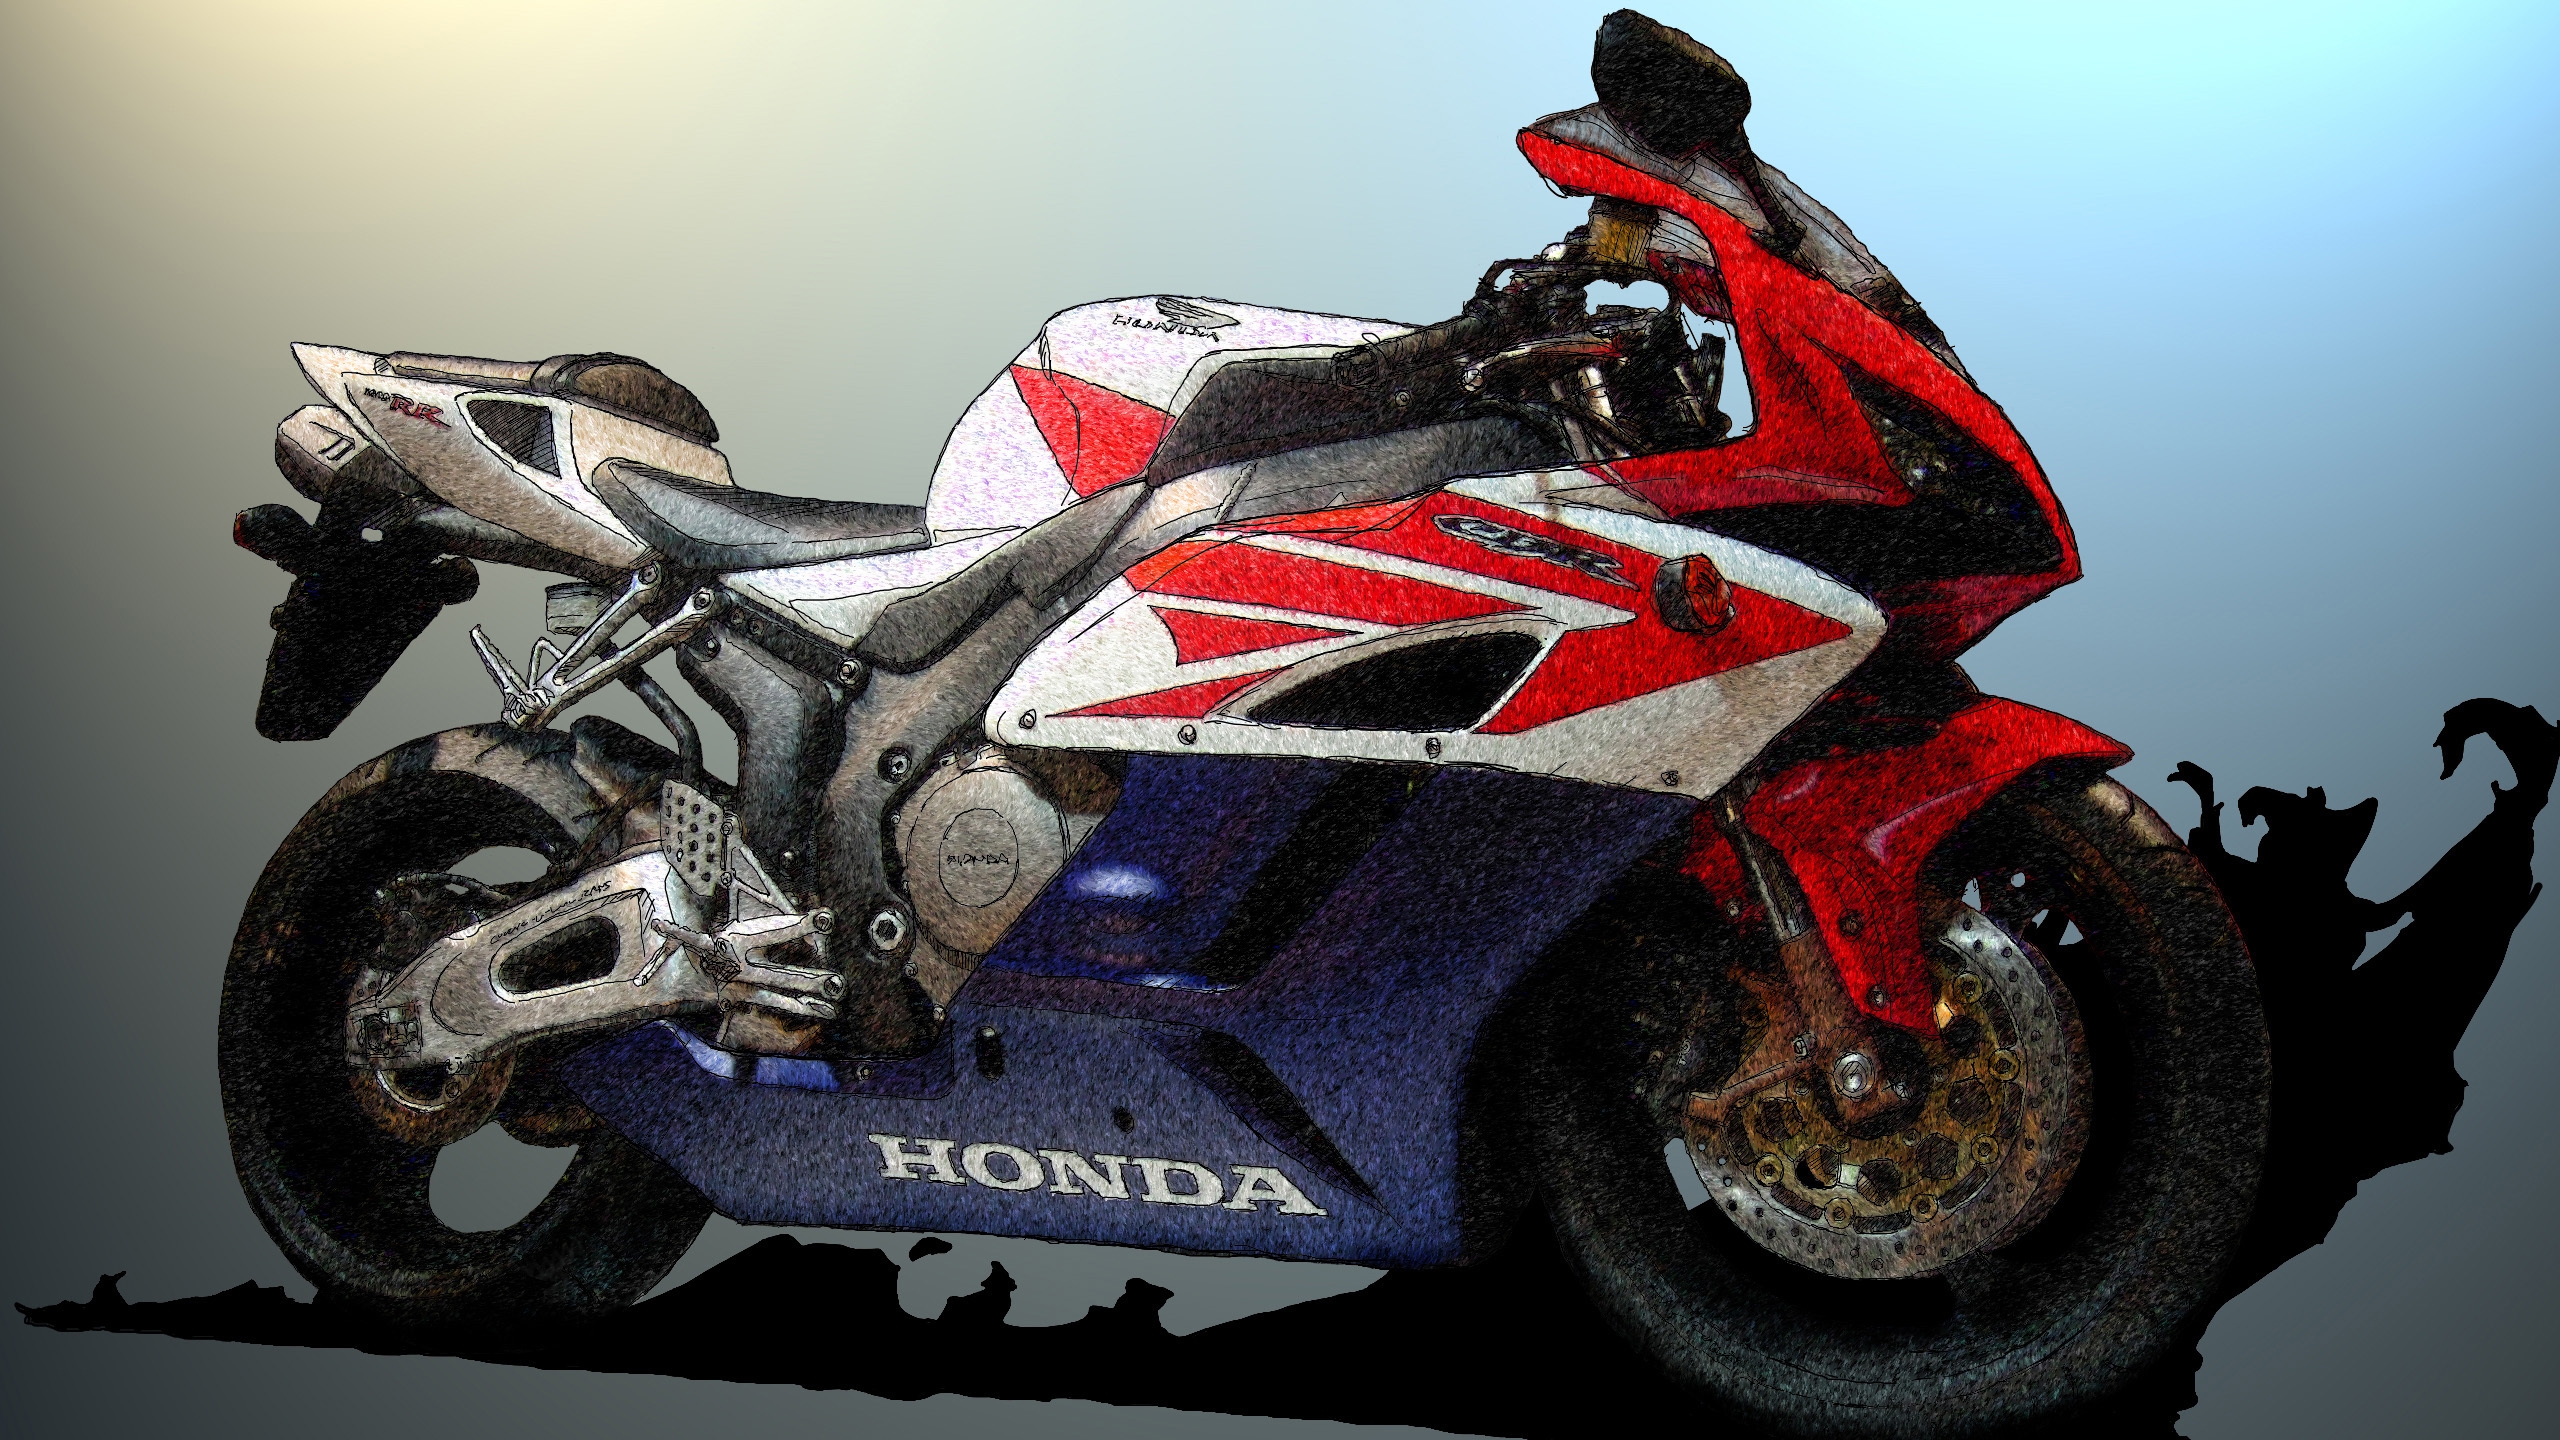 Honda CBR Sketch for 2560x1440 HDTV resolution